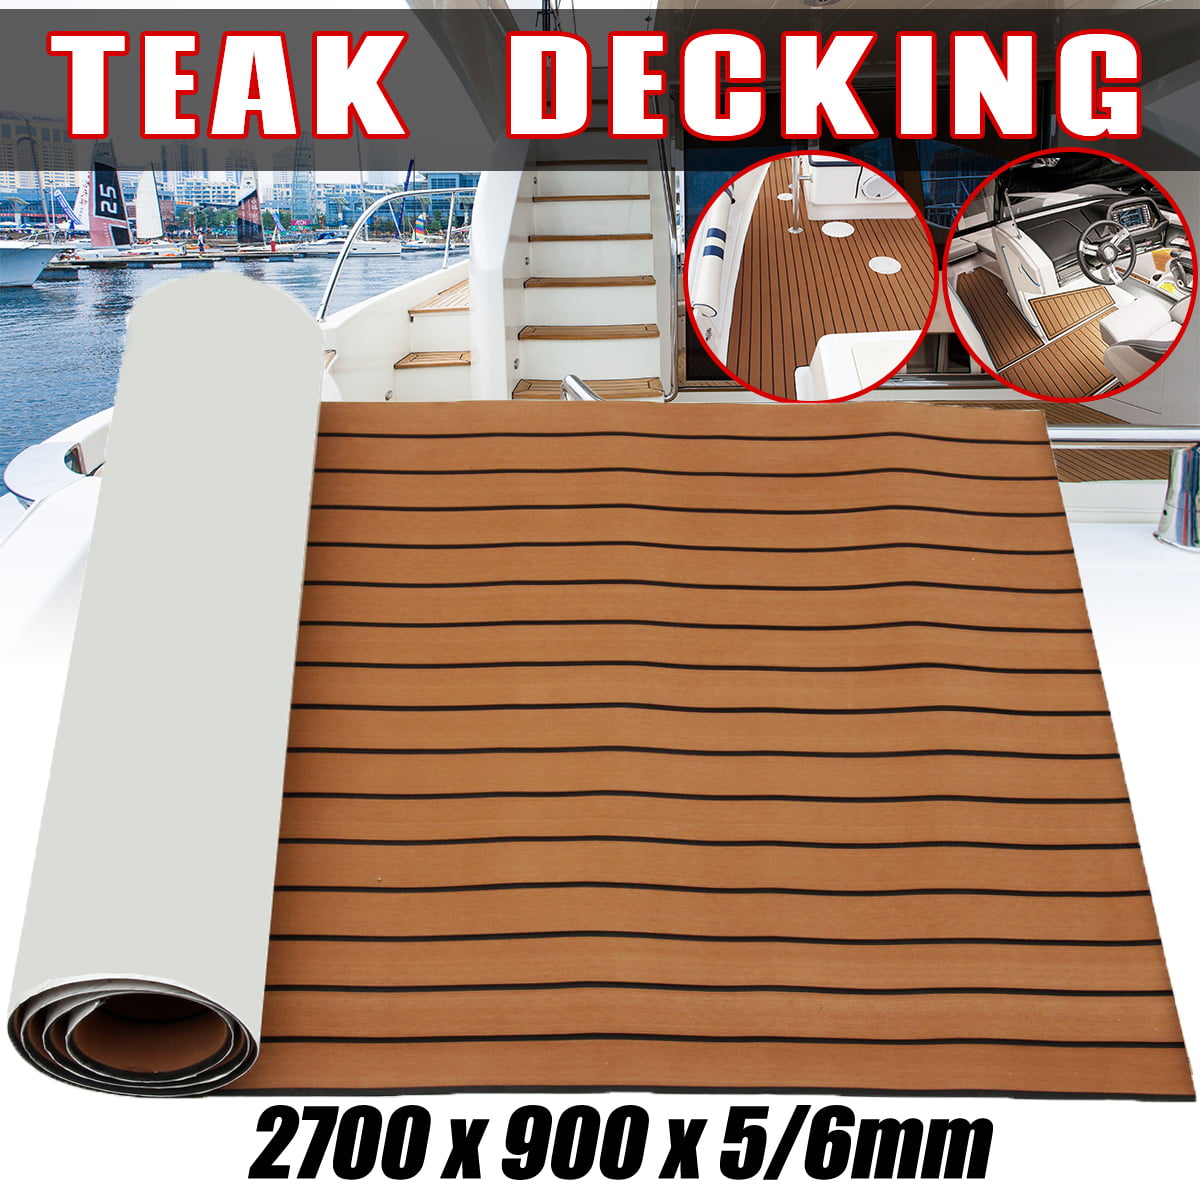 1pcs 106 X 35 Marine Boat Sheet Teak Decking Boat Flooring Mats Yacht Flooring Eva Foam Floor Sheet Non Skid Self Adhesive Sea Deck Walmart Com Walmart Com